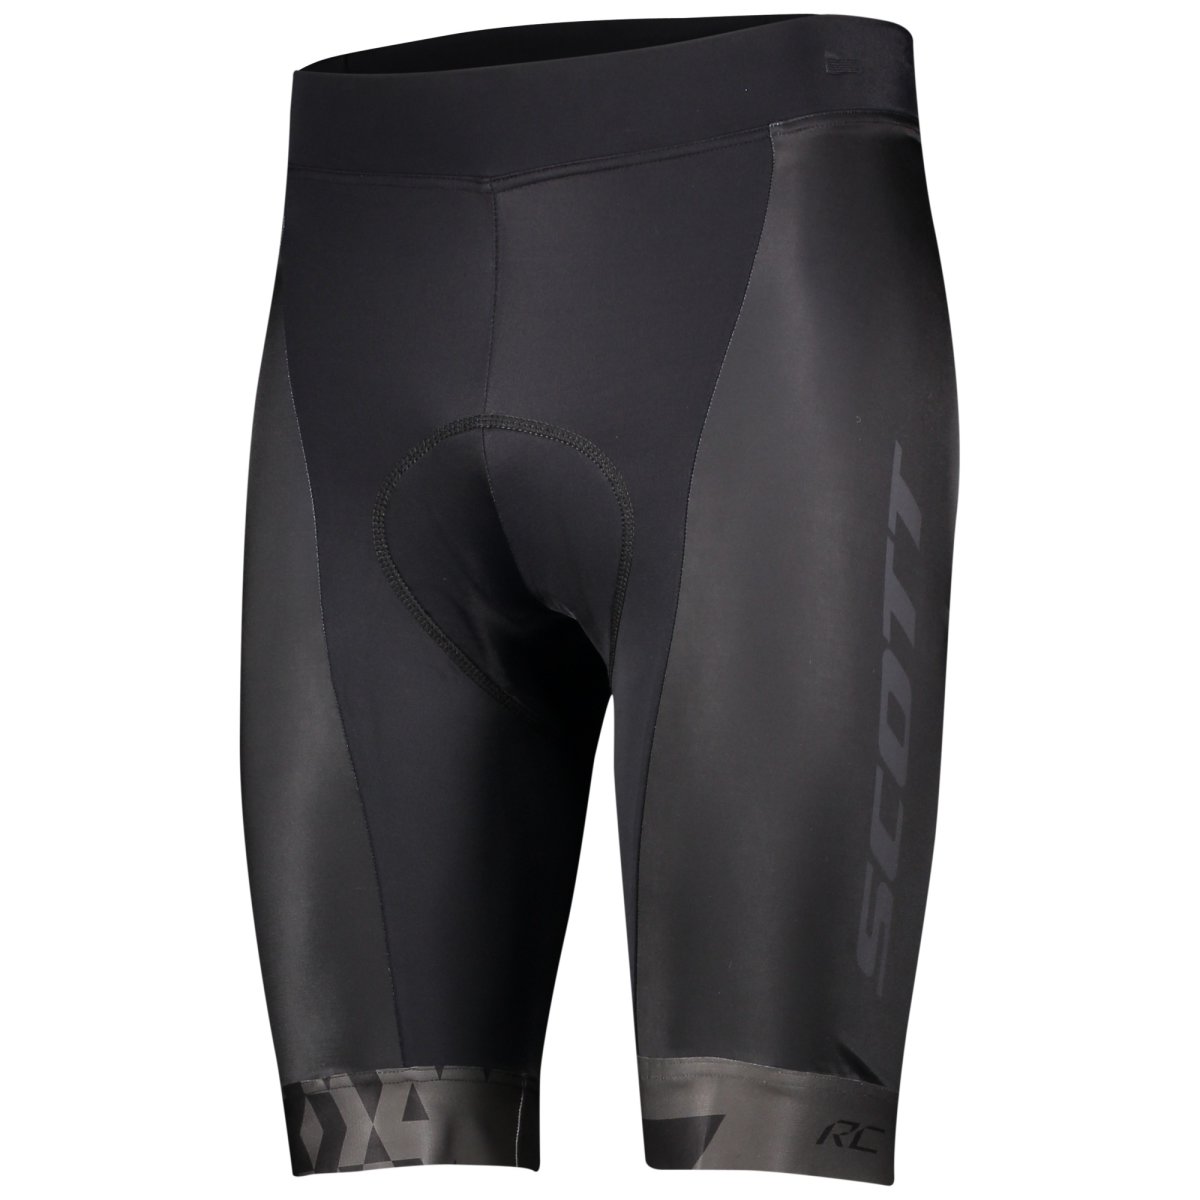 Шорты Scott RC Team ++ Men's Shorts (Black/Dark Grey) 280324.1659.008, 280324.1659.010, 280324.1659.009, 280324.1659.007